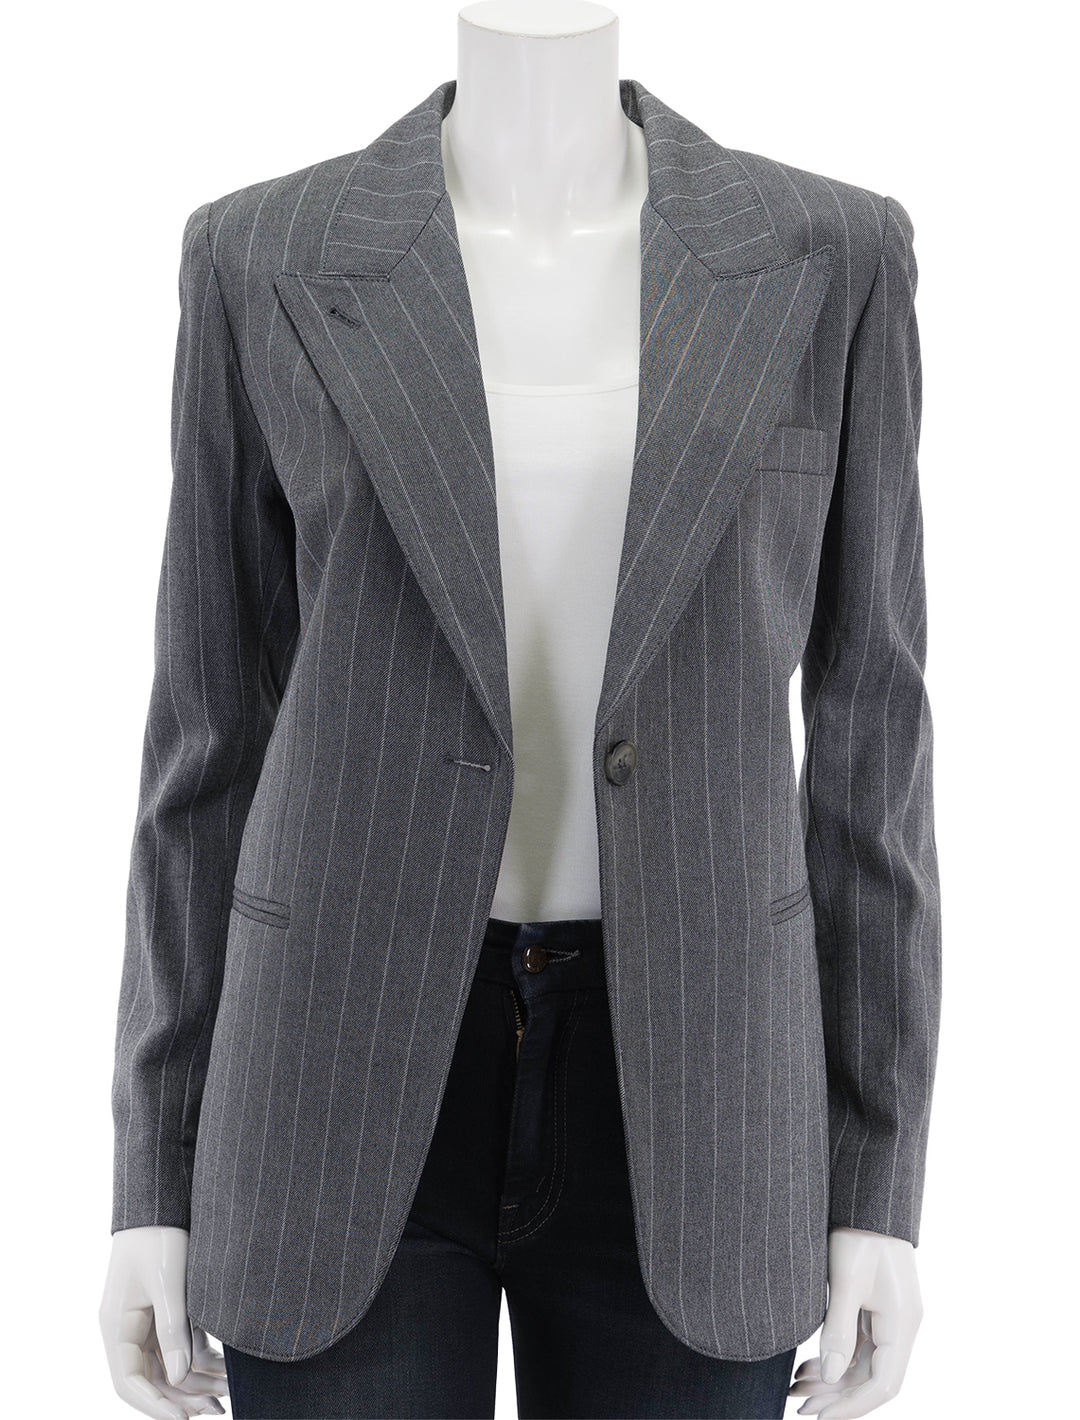 Front view of Smythe's 90's blazer in grey pinstripe, unbuttoned.